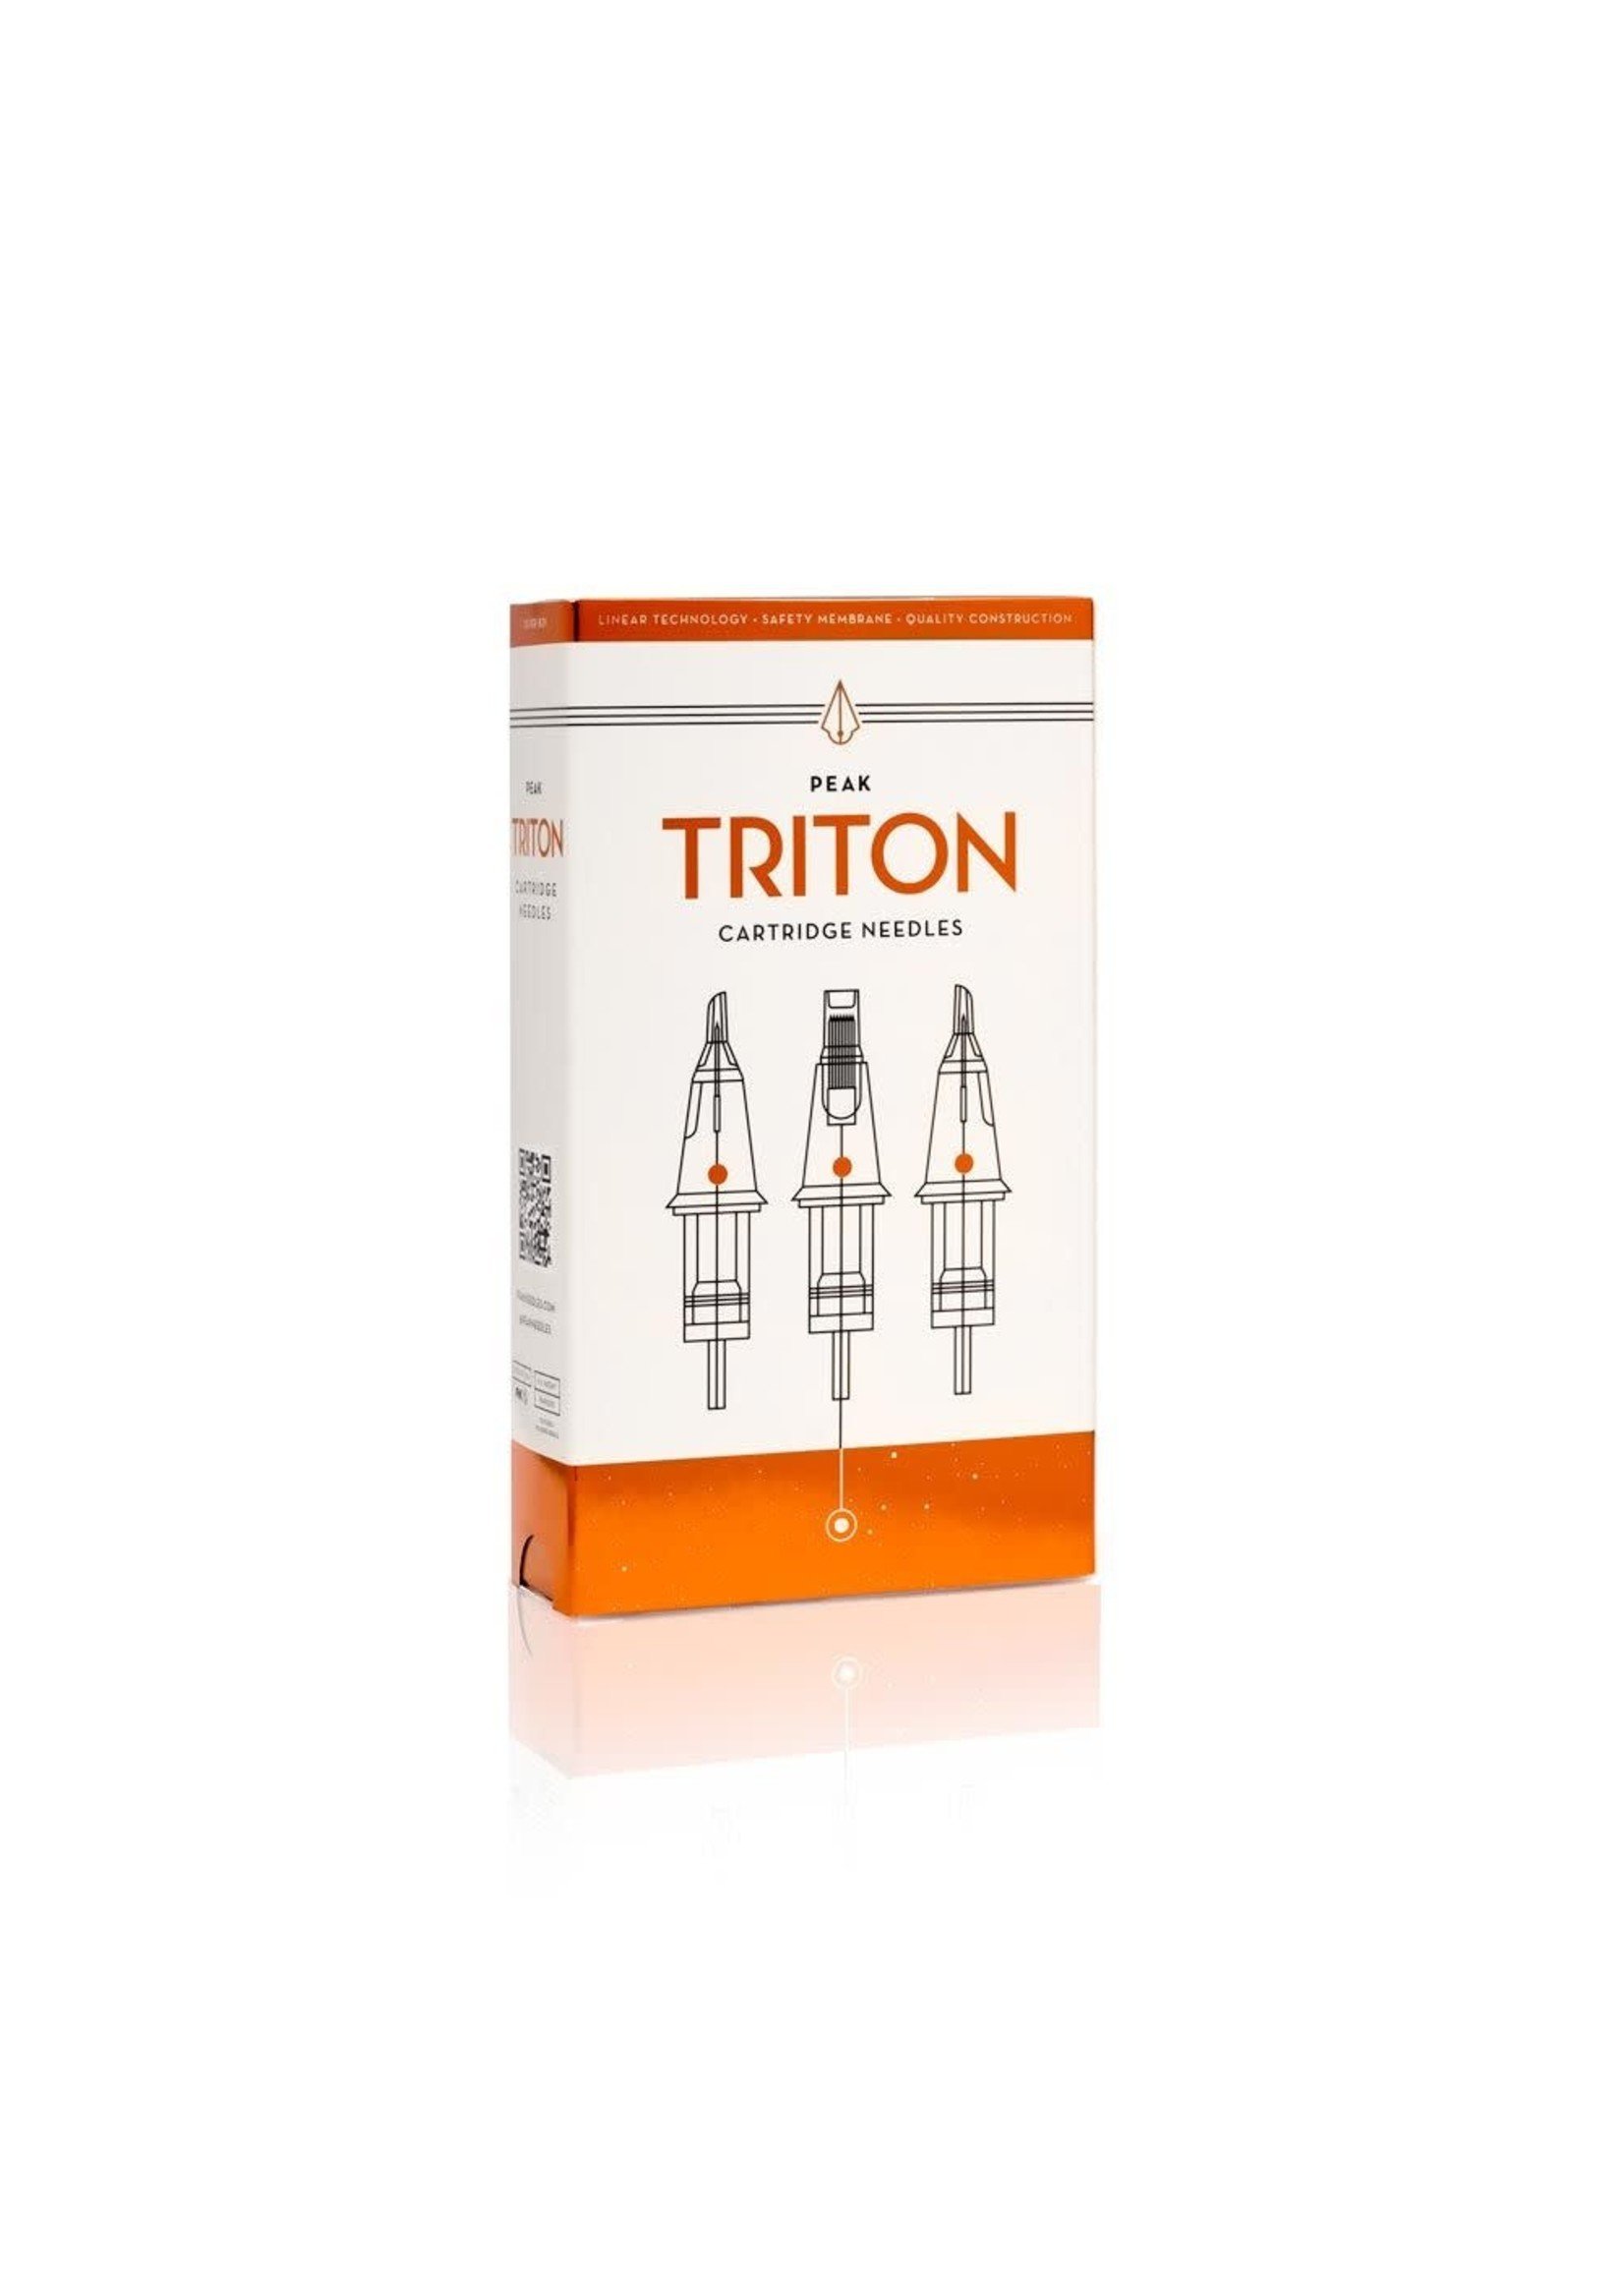 Peak Triton Cartridge Needles — 7 Super Tight Round Liners (20)